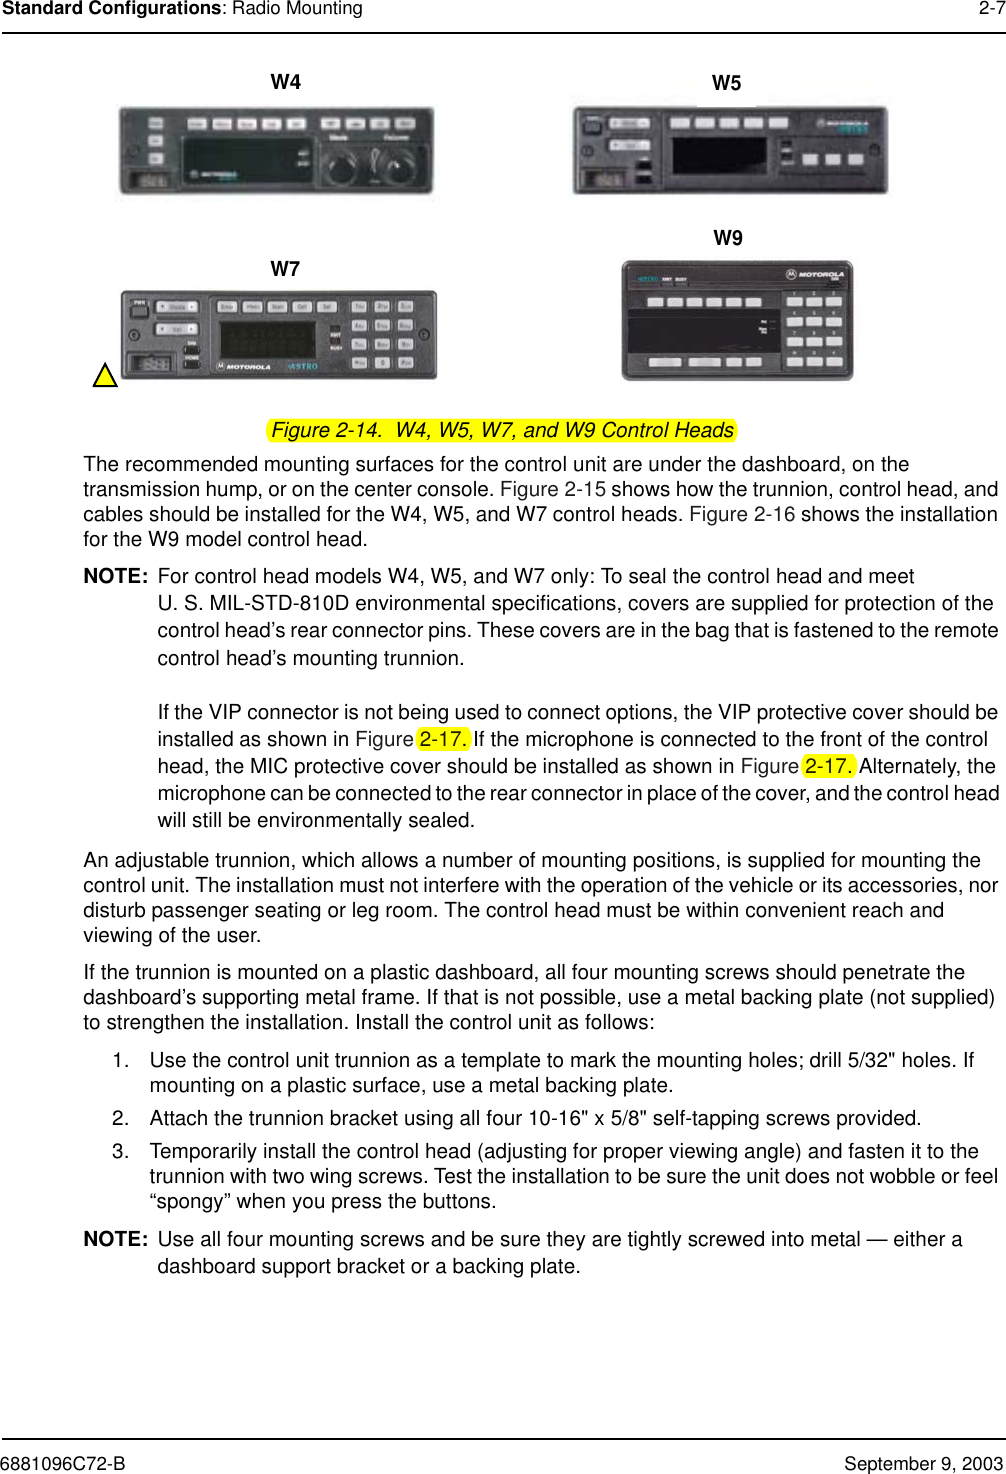 msd-2 digital wiring instructions